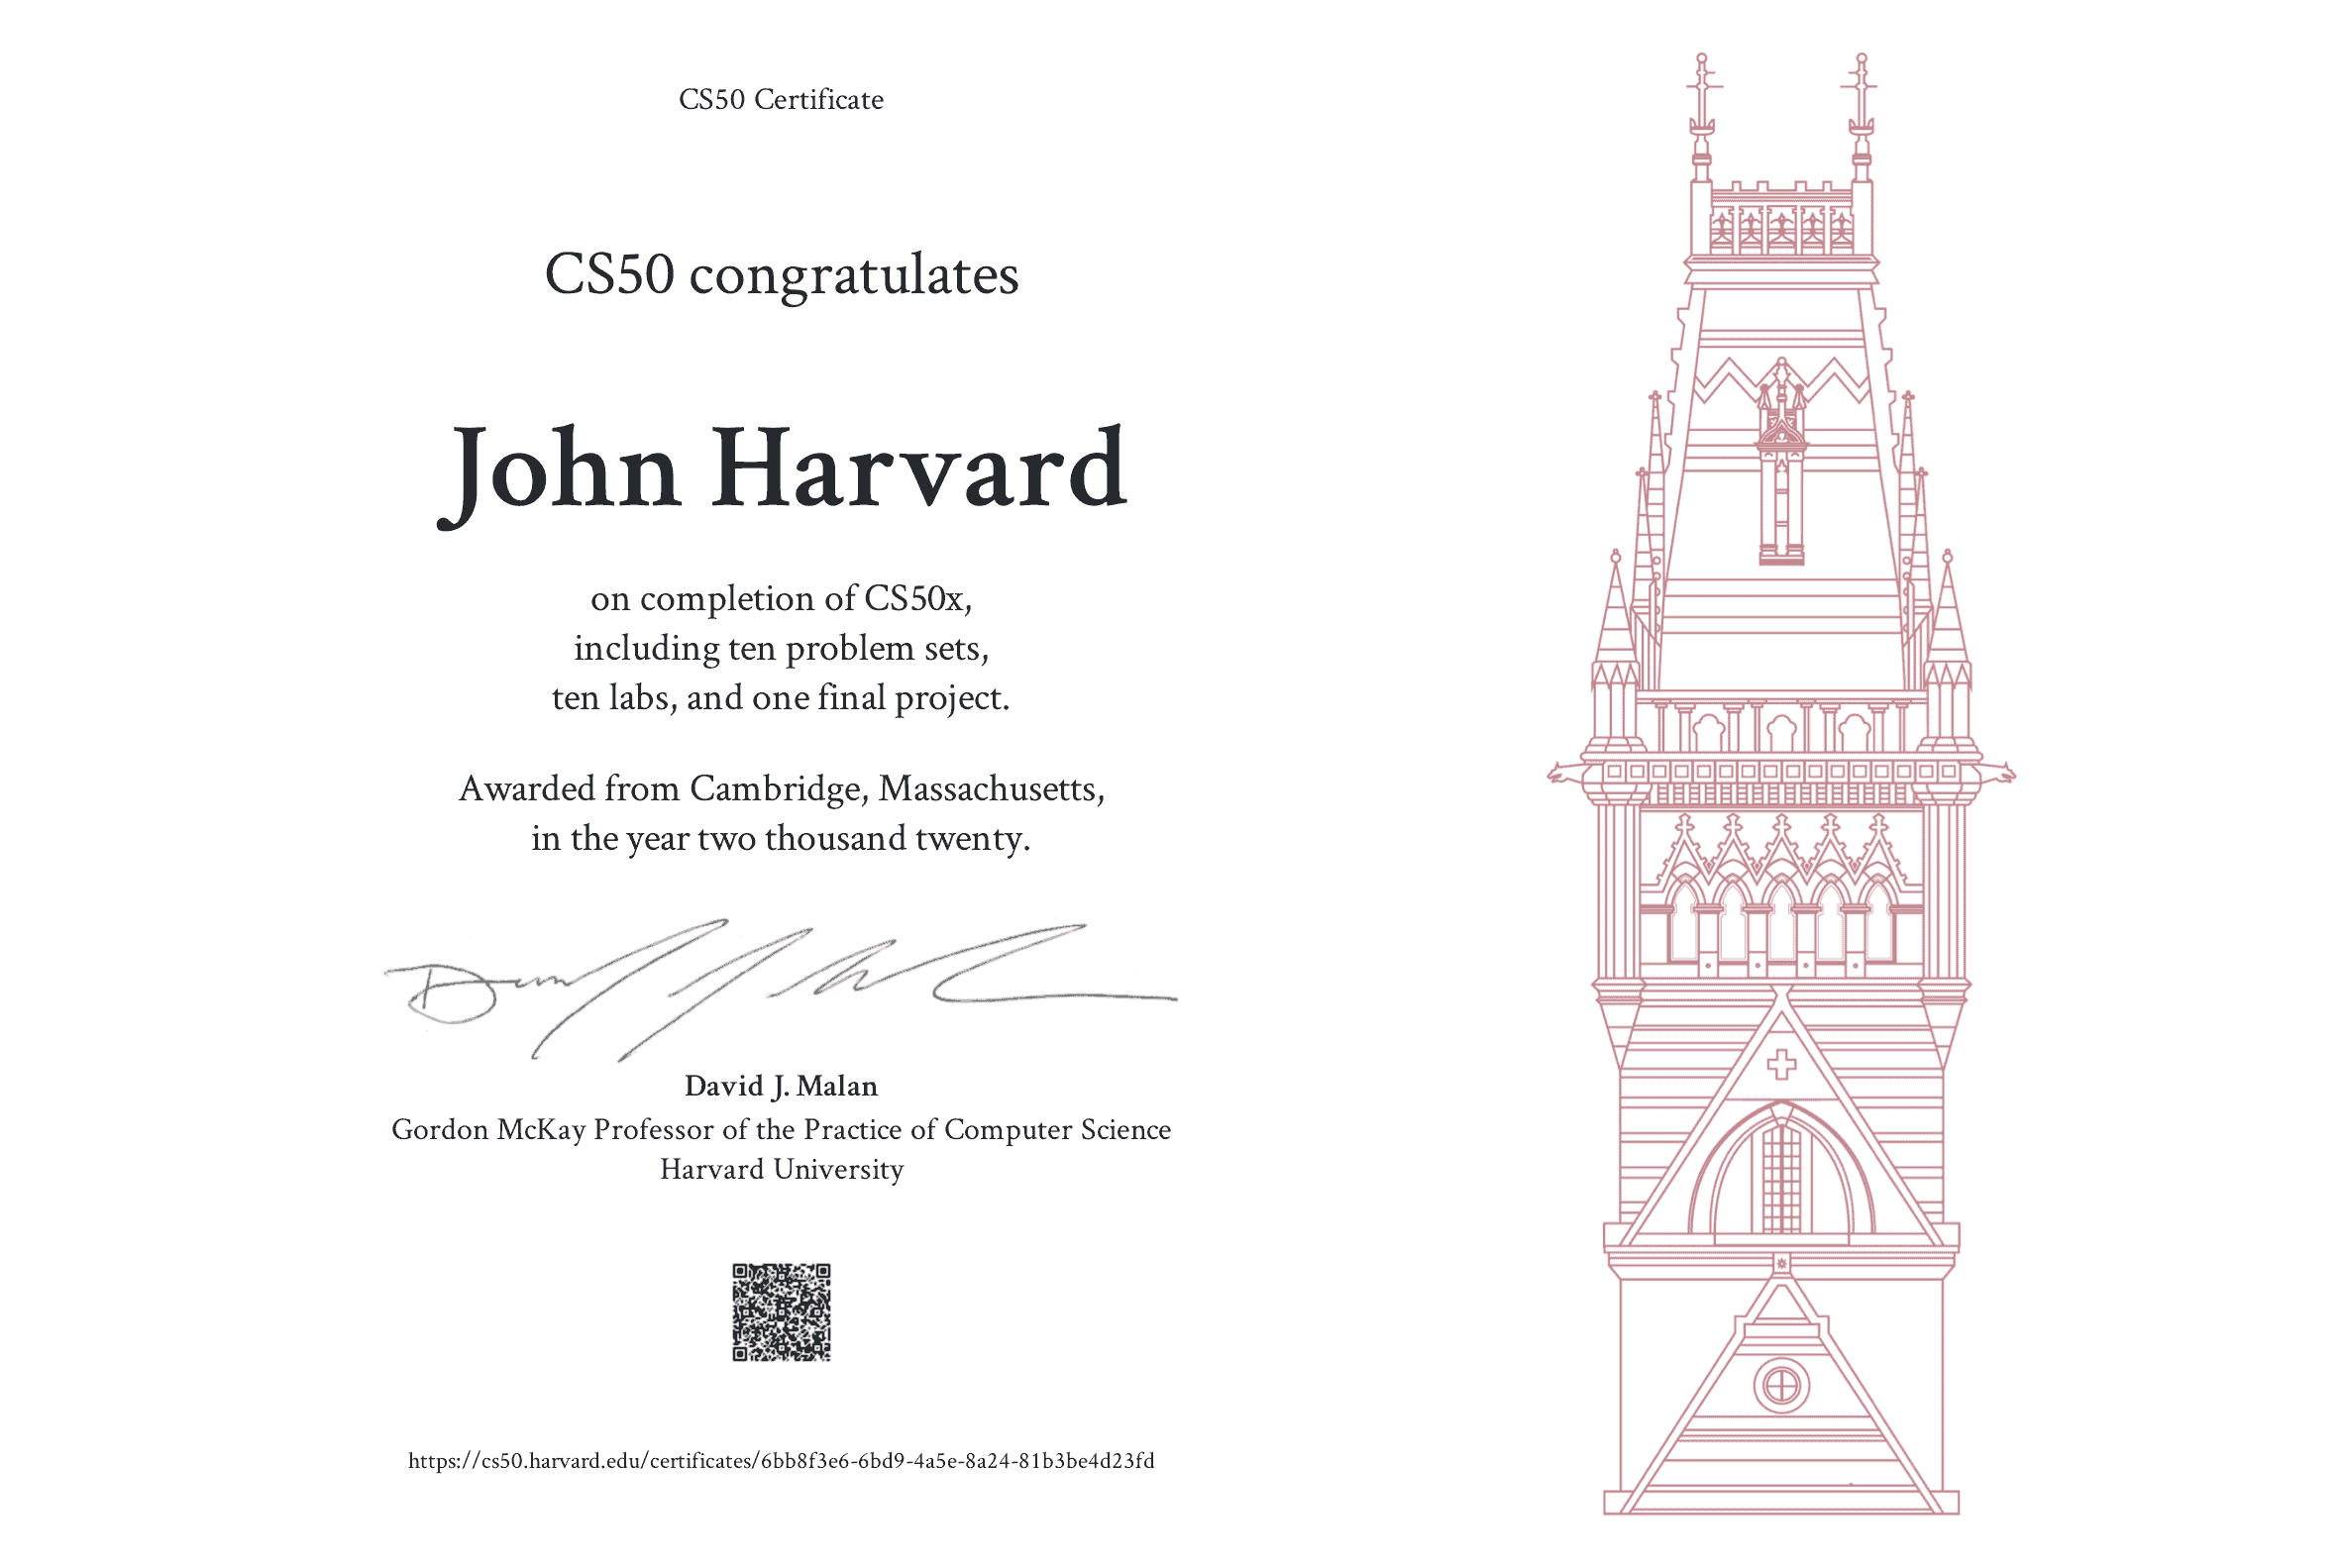 Is Harvard CS50 for beginners?